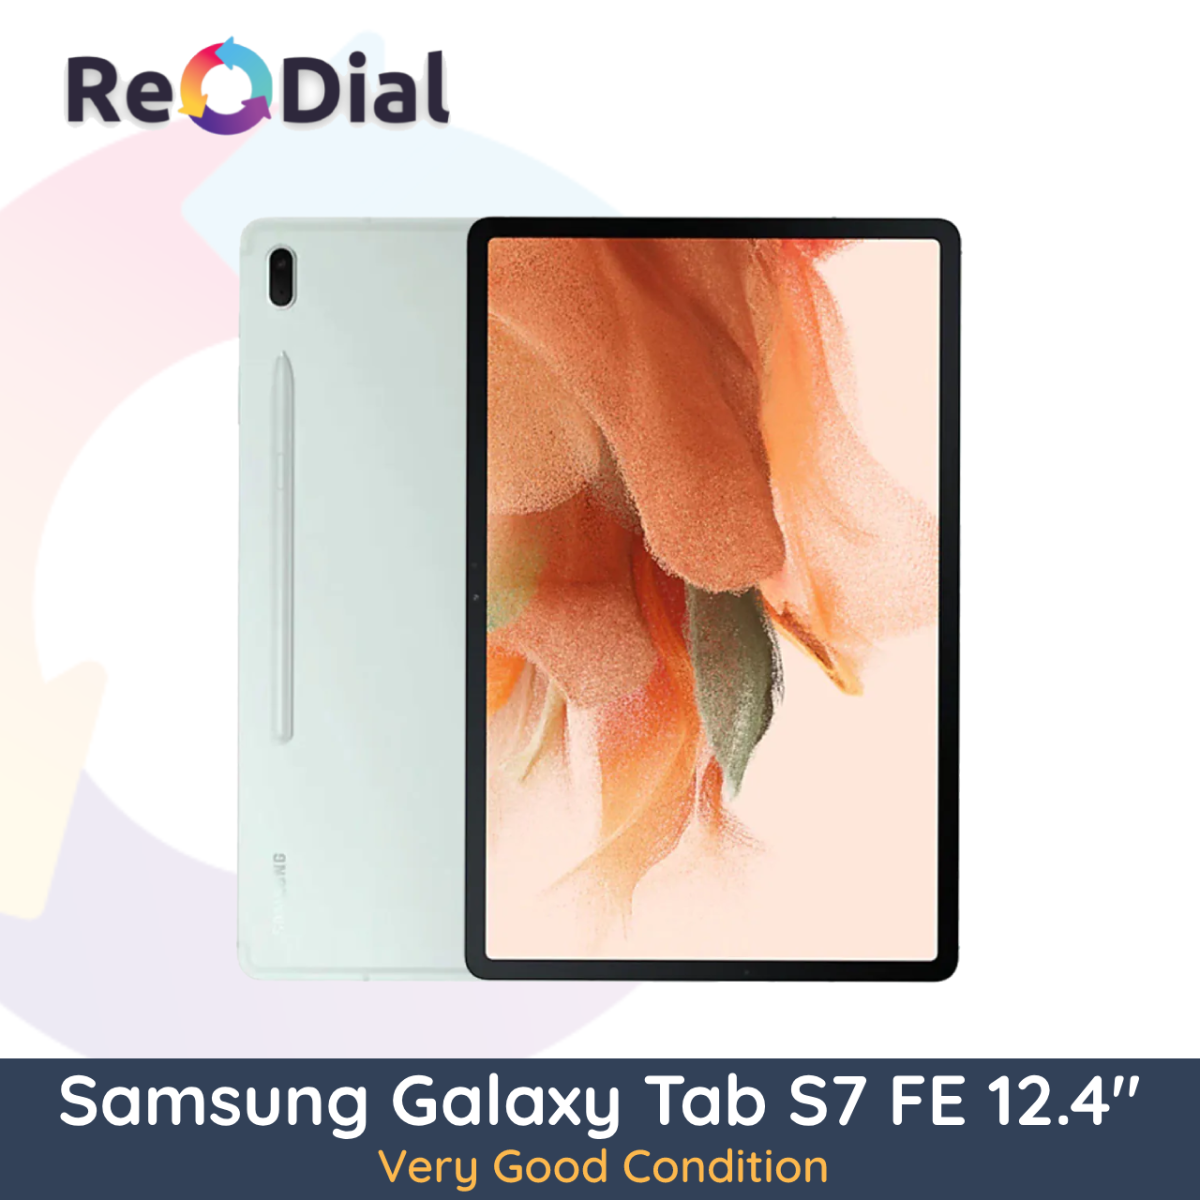 Samsung Galaxy Tab S7 FE 12.4" (2021) WiFi - Very Good Condition